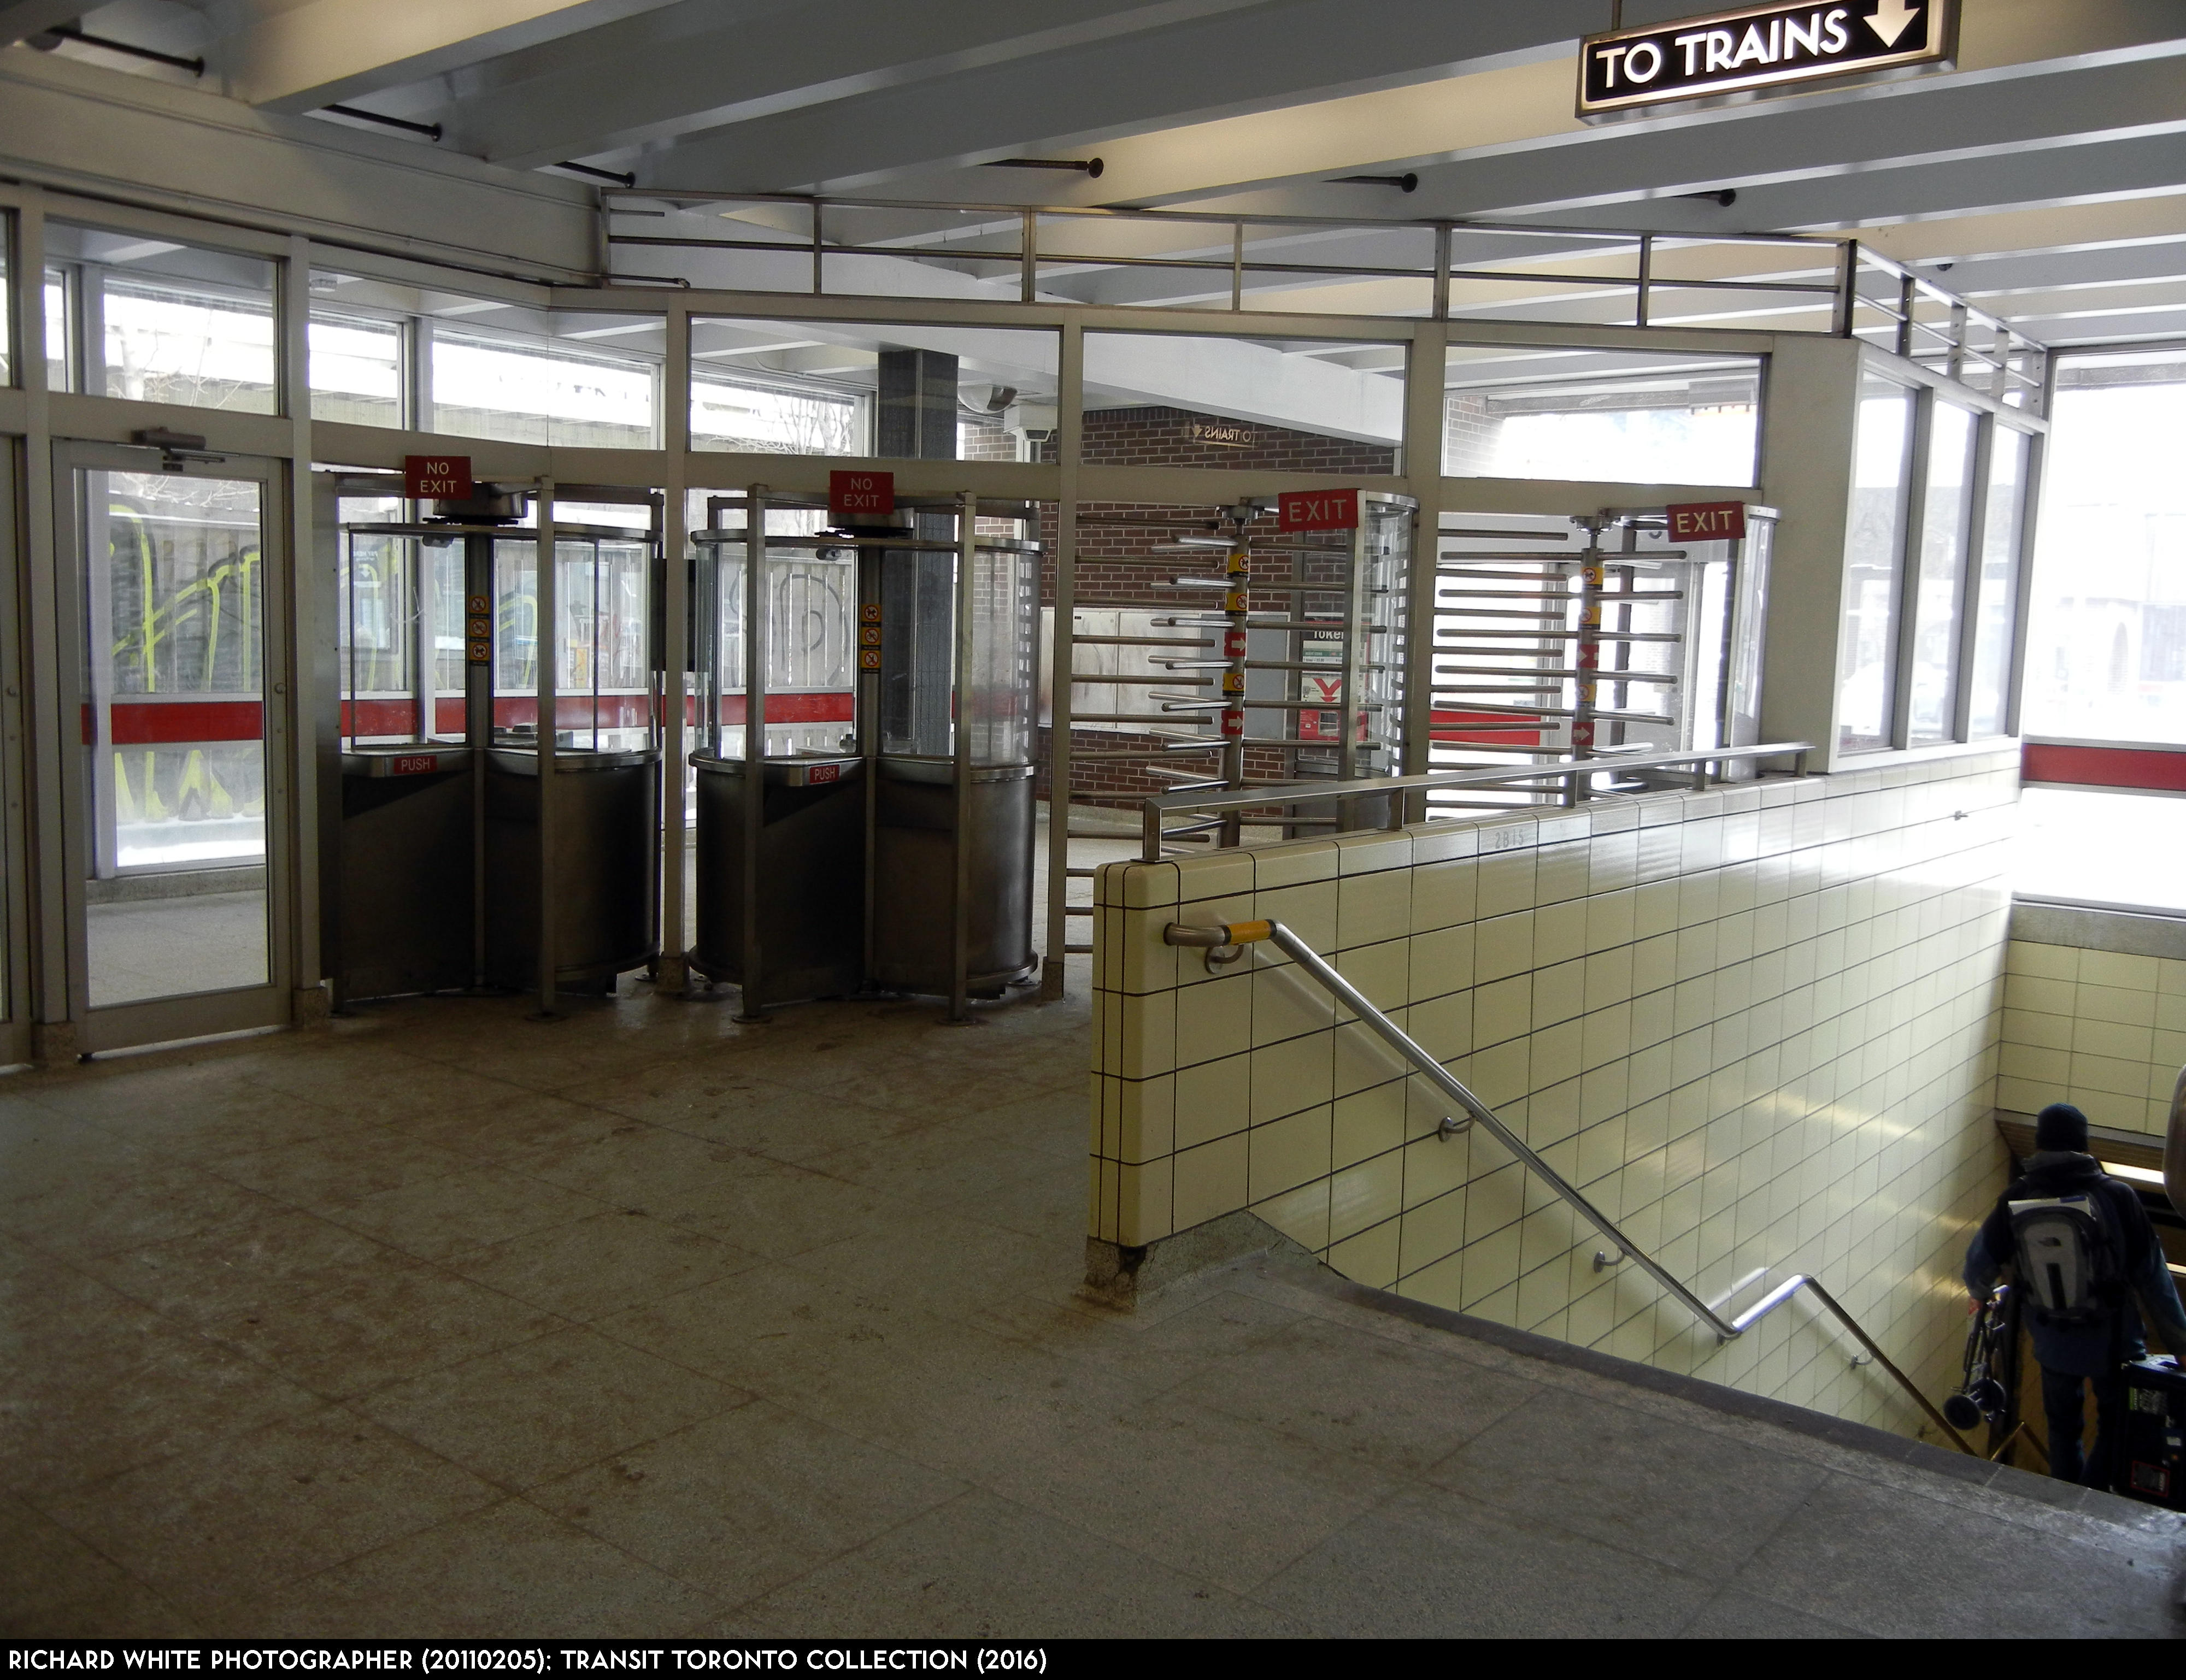 Bloor-Danforth Subway 14 Spadina 20110205-3